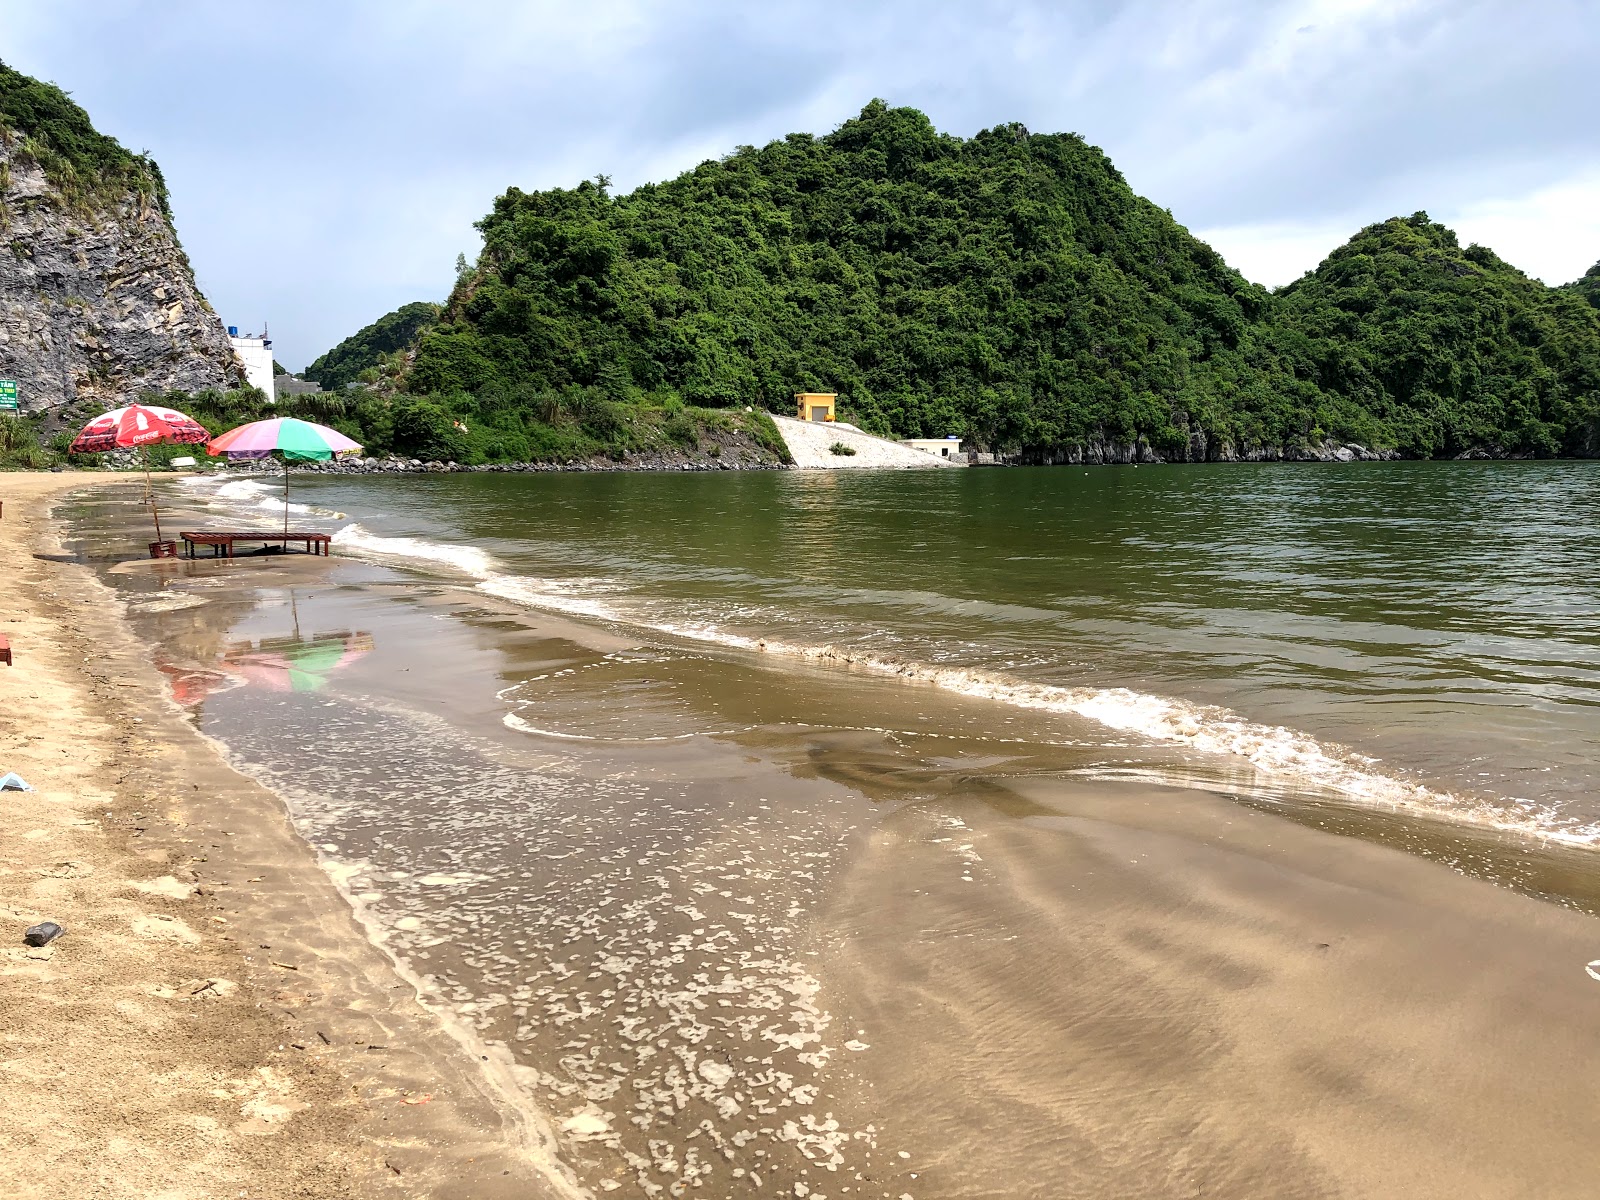 Fotografija Tung thu beach z svetel pesek površino